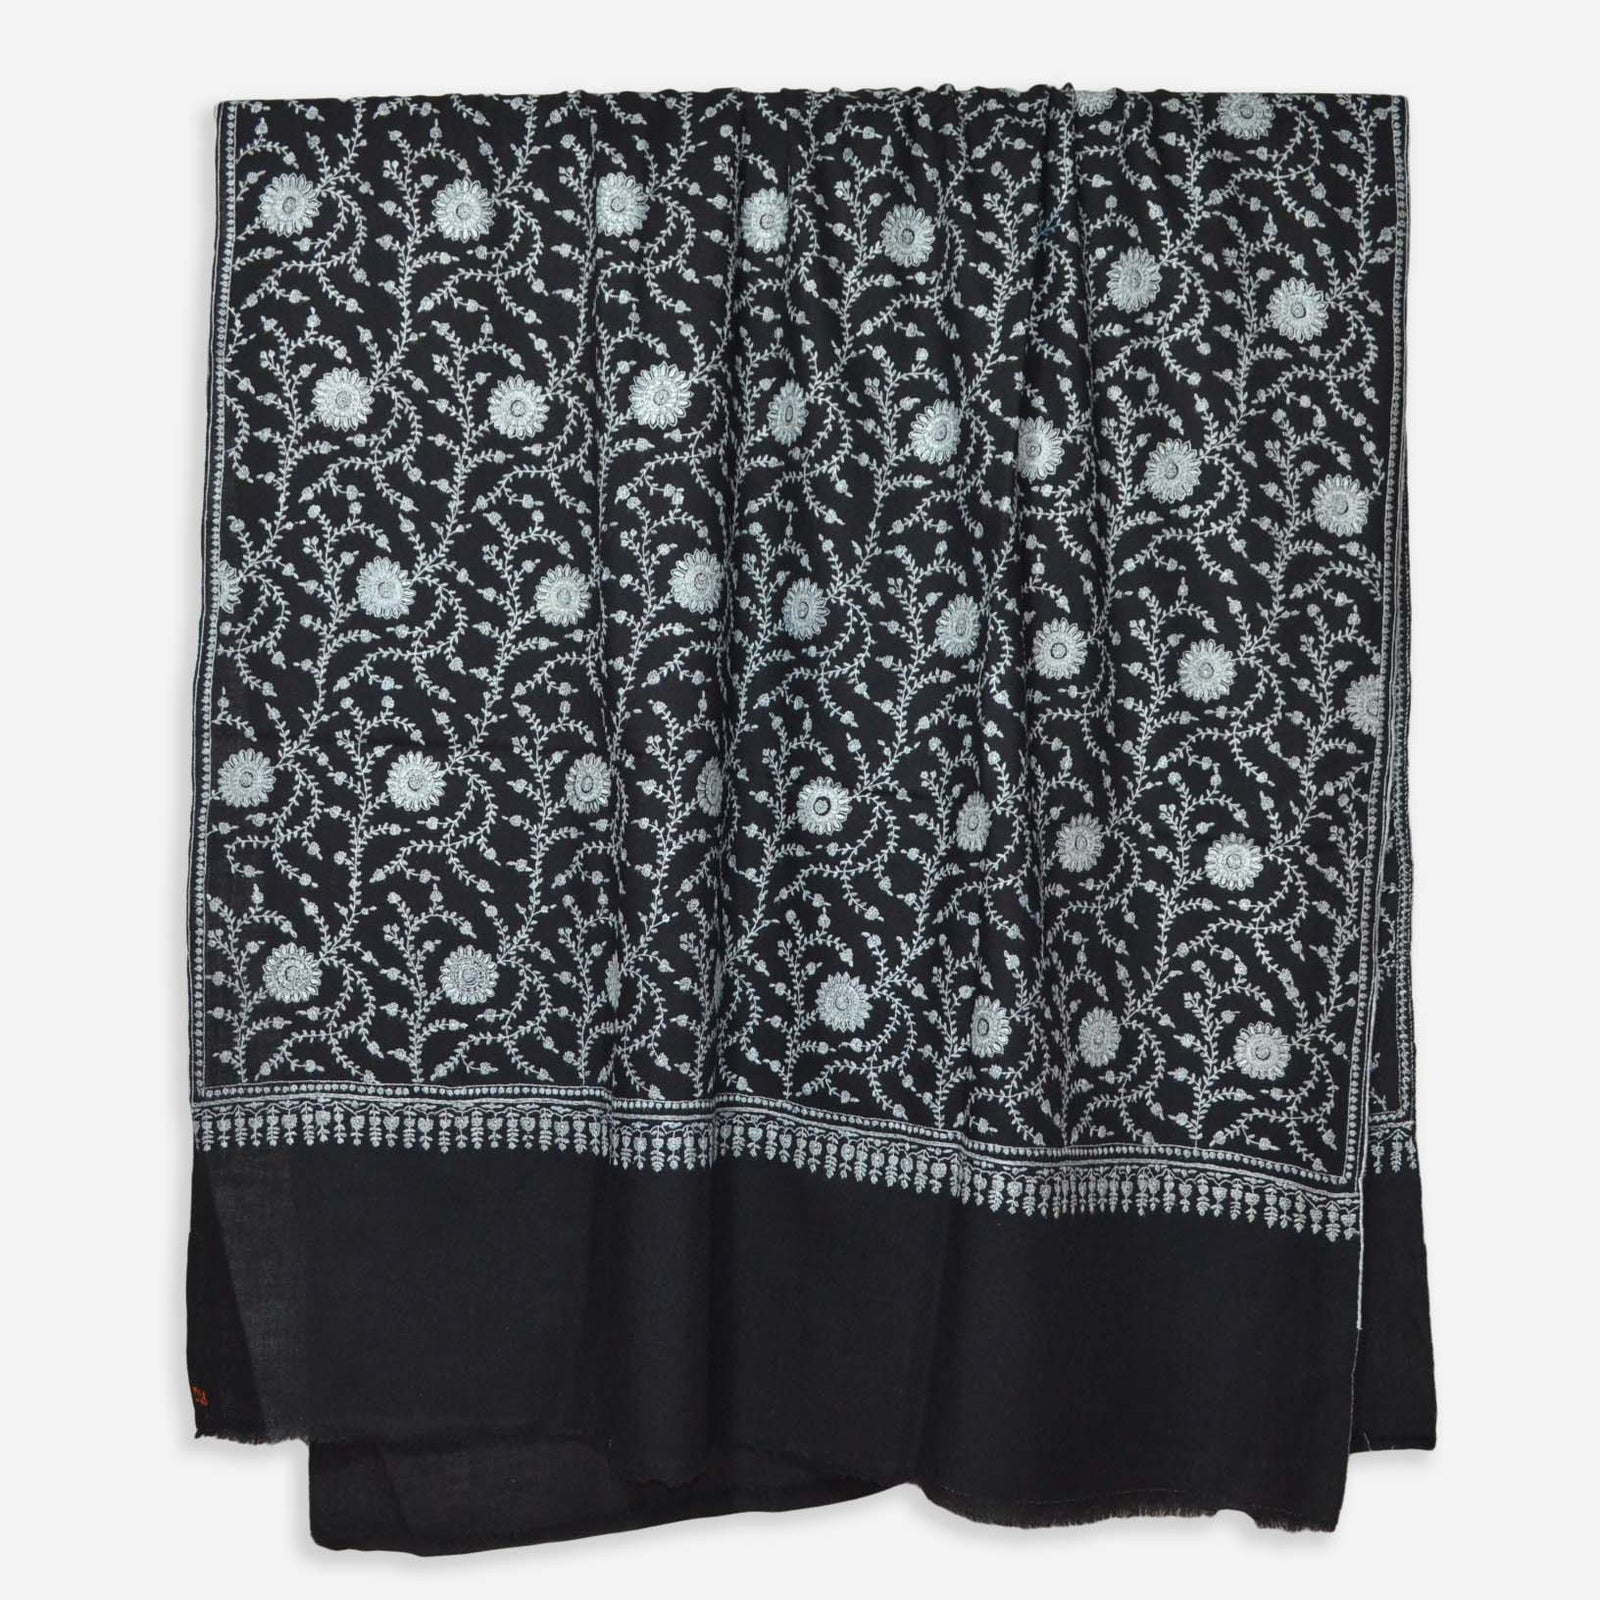 buy black jali embroidery cashmere pashmina shawl